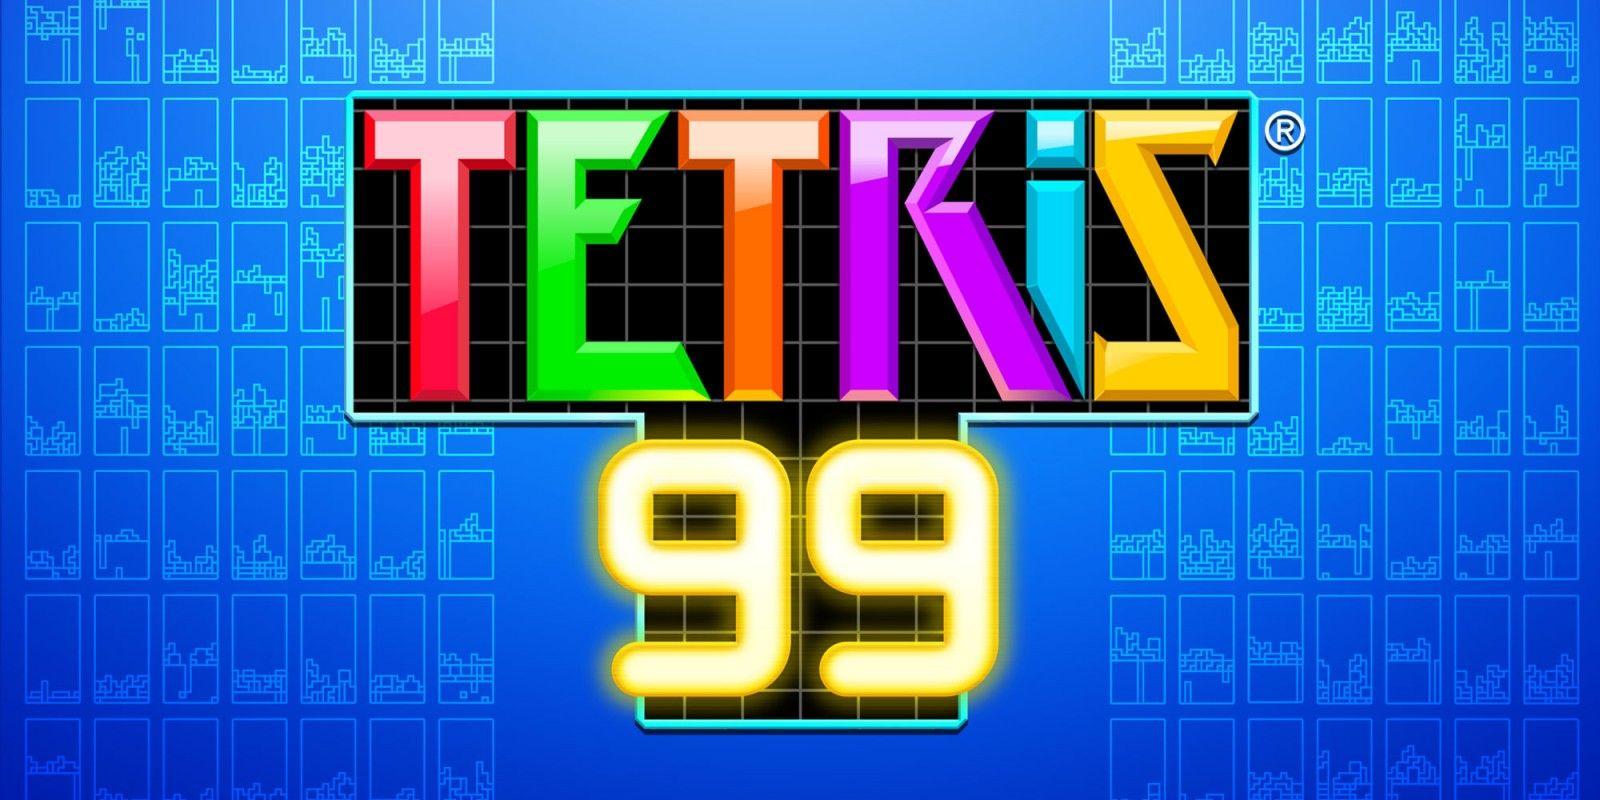 TETRIS® 99. Nintendo Switch download software